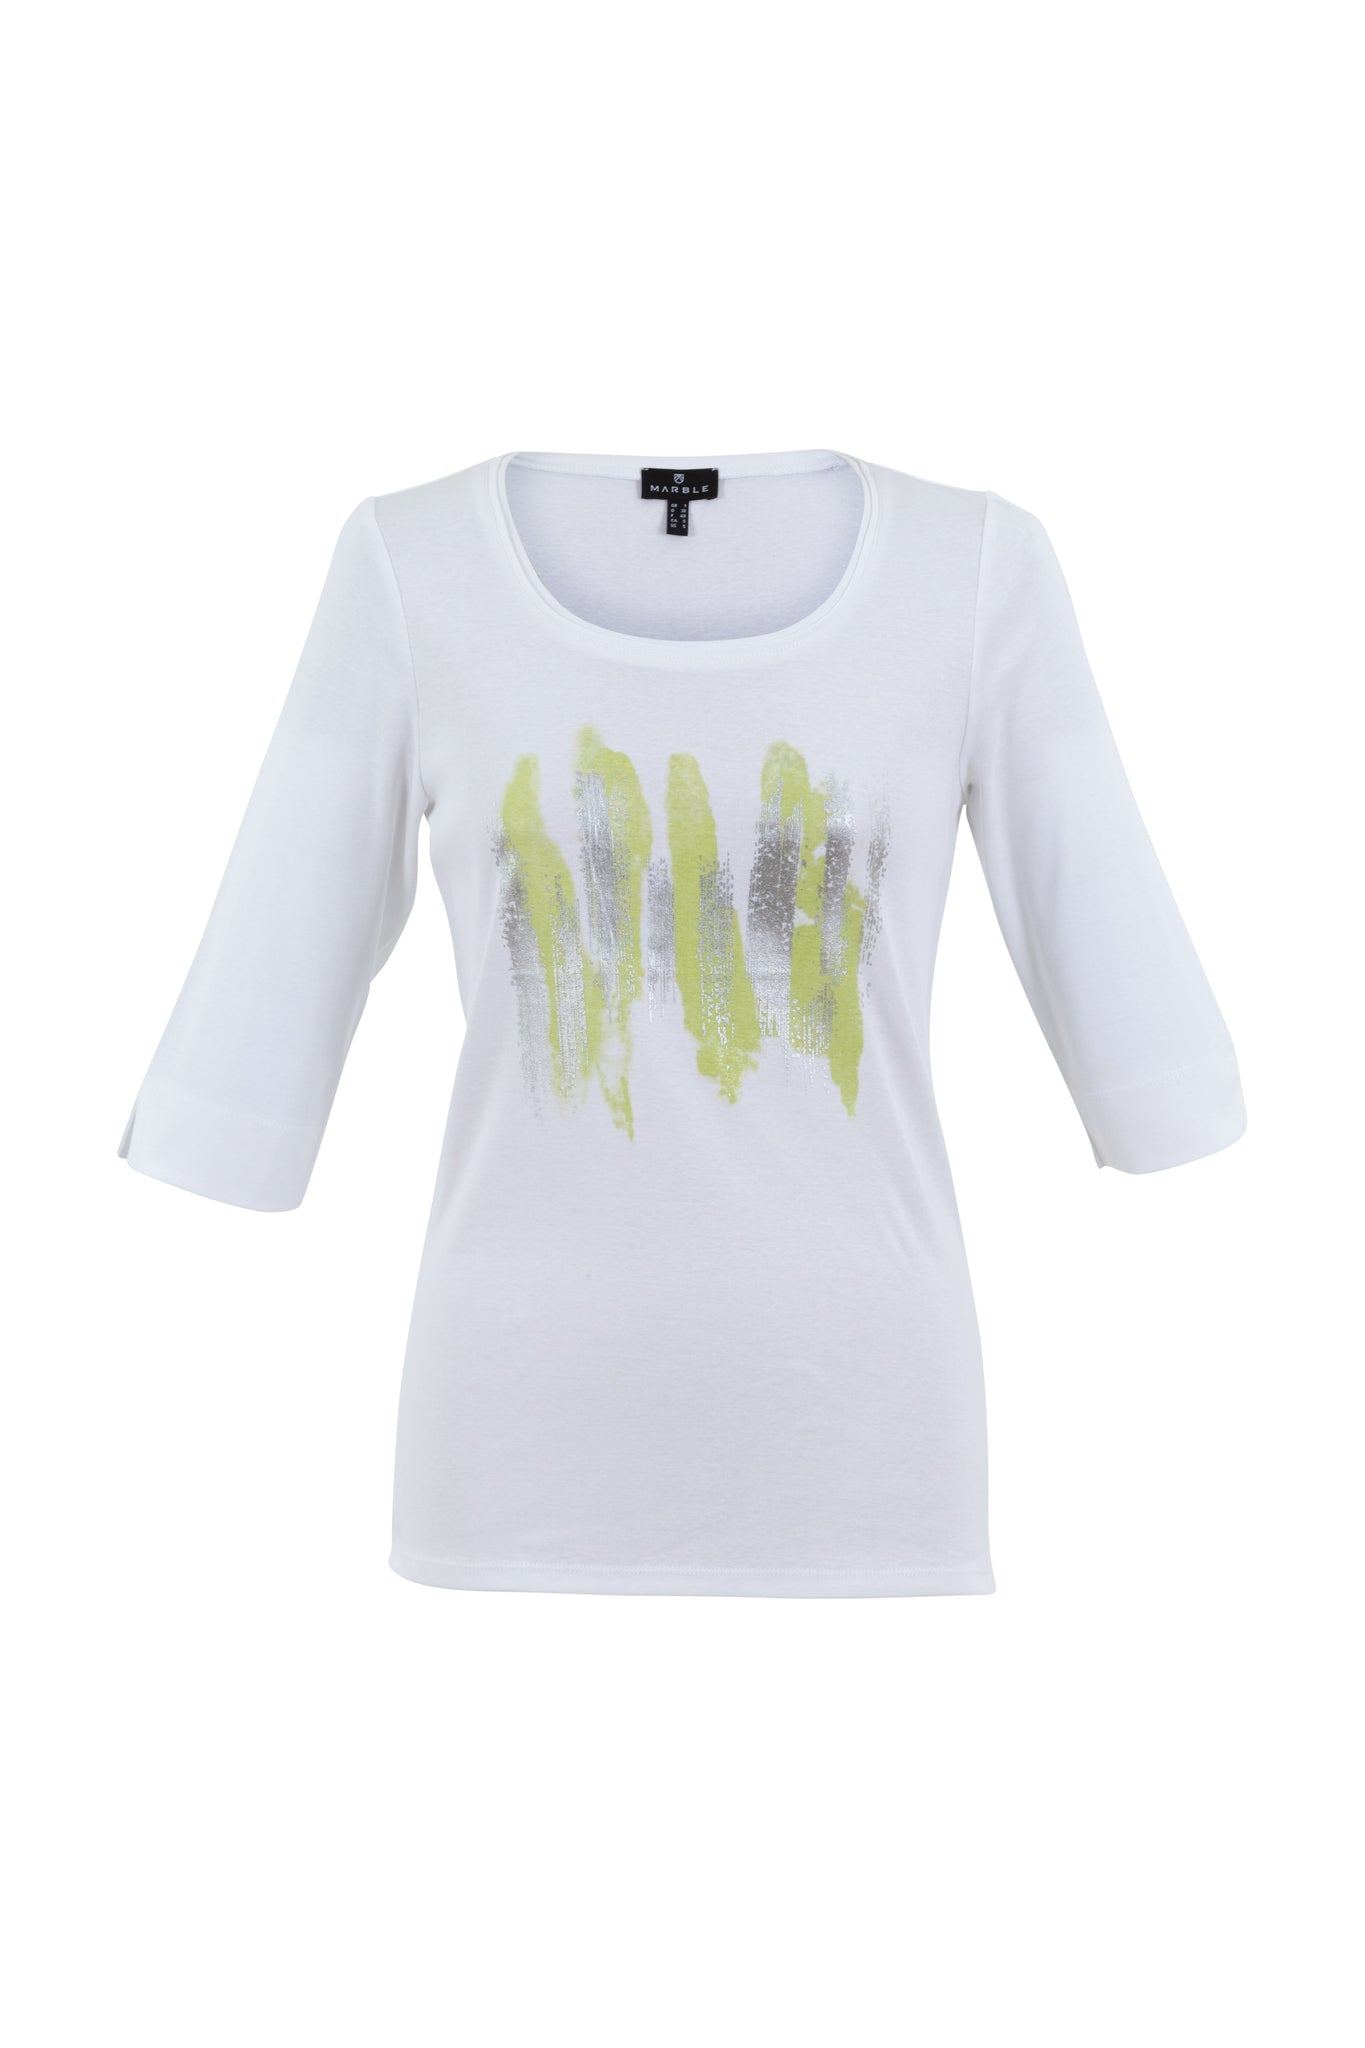 Marble brush stroke print tshirt in white code 6928-216